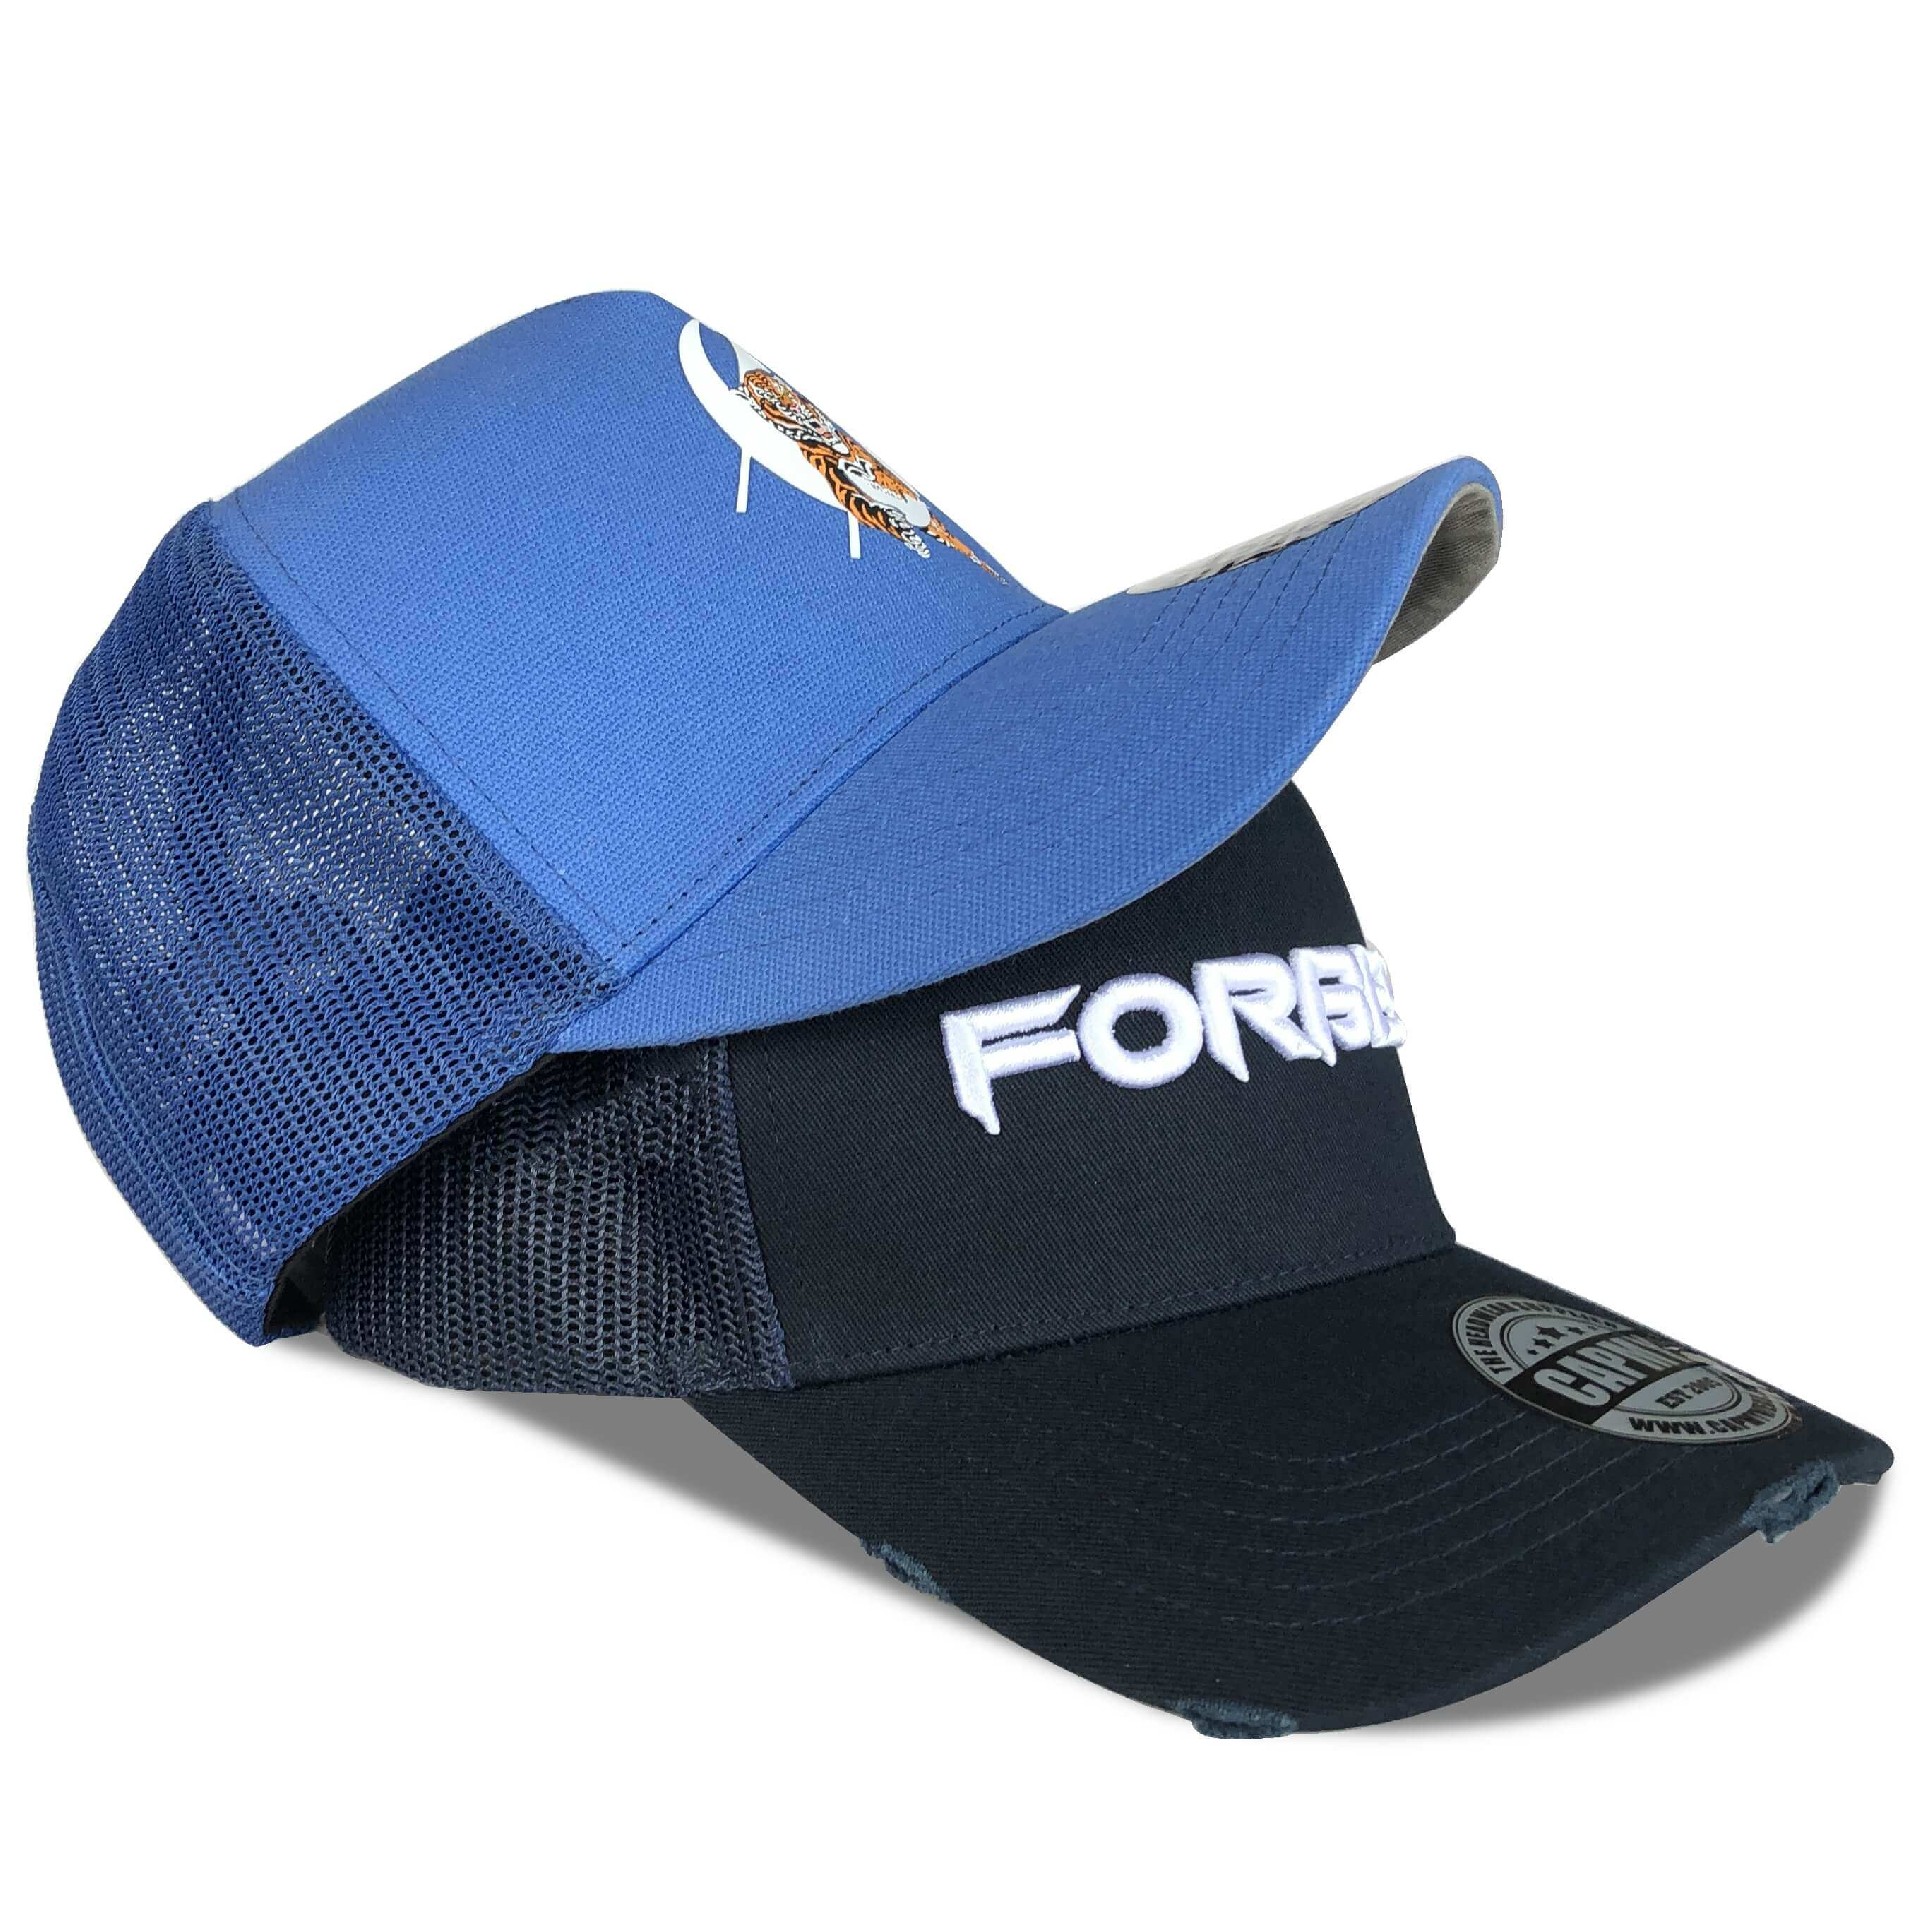 CMC-3102(Fashion Design 5 Panel Yelir Shape Distressed Mesh Cap 3D Embroidered Navy Blue Vintage Rip Trucker Hats)